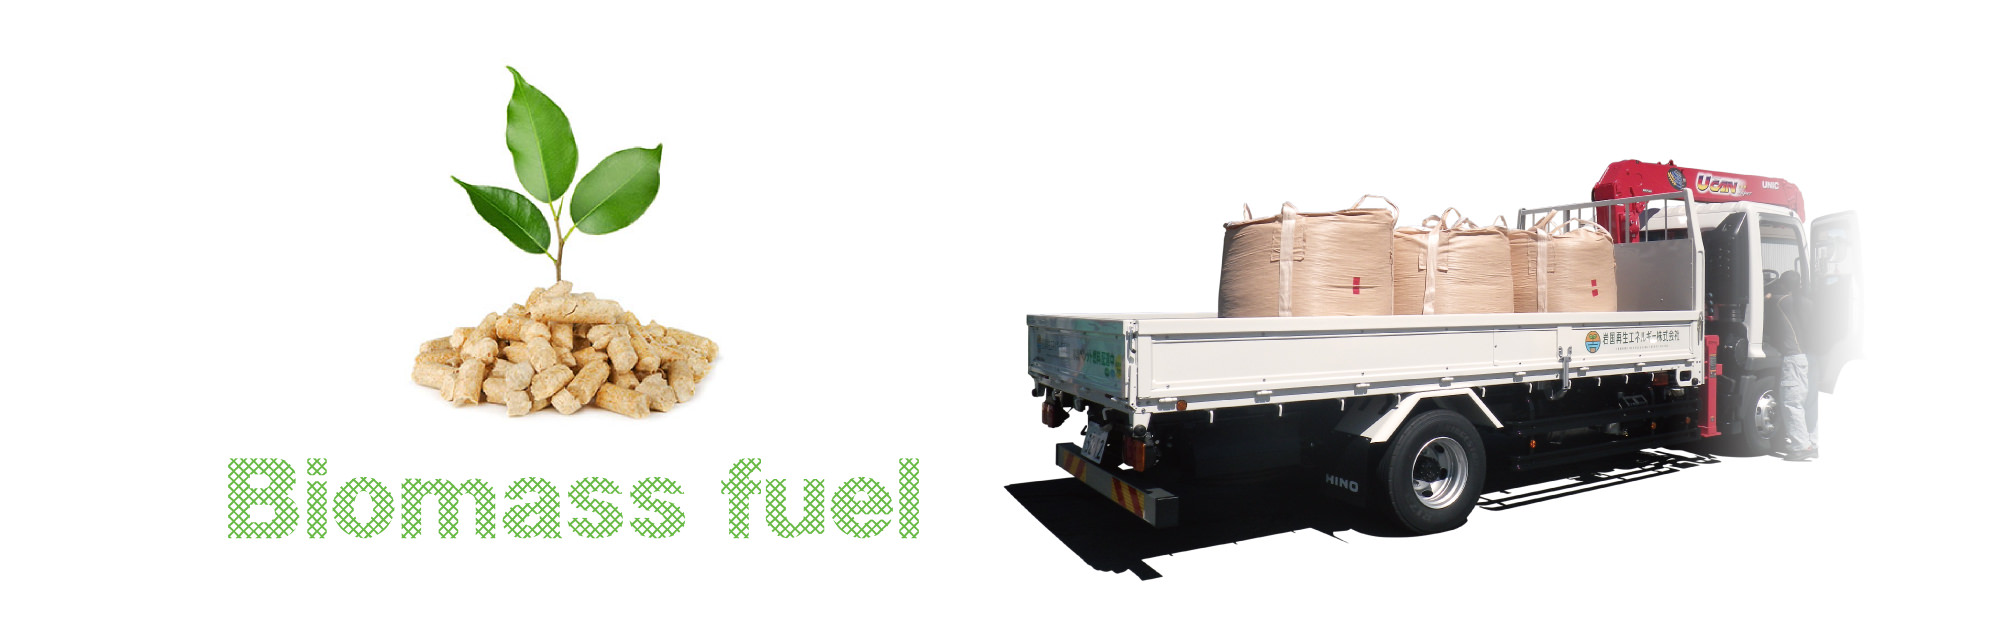 Biomass fuel